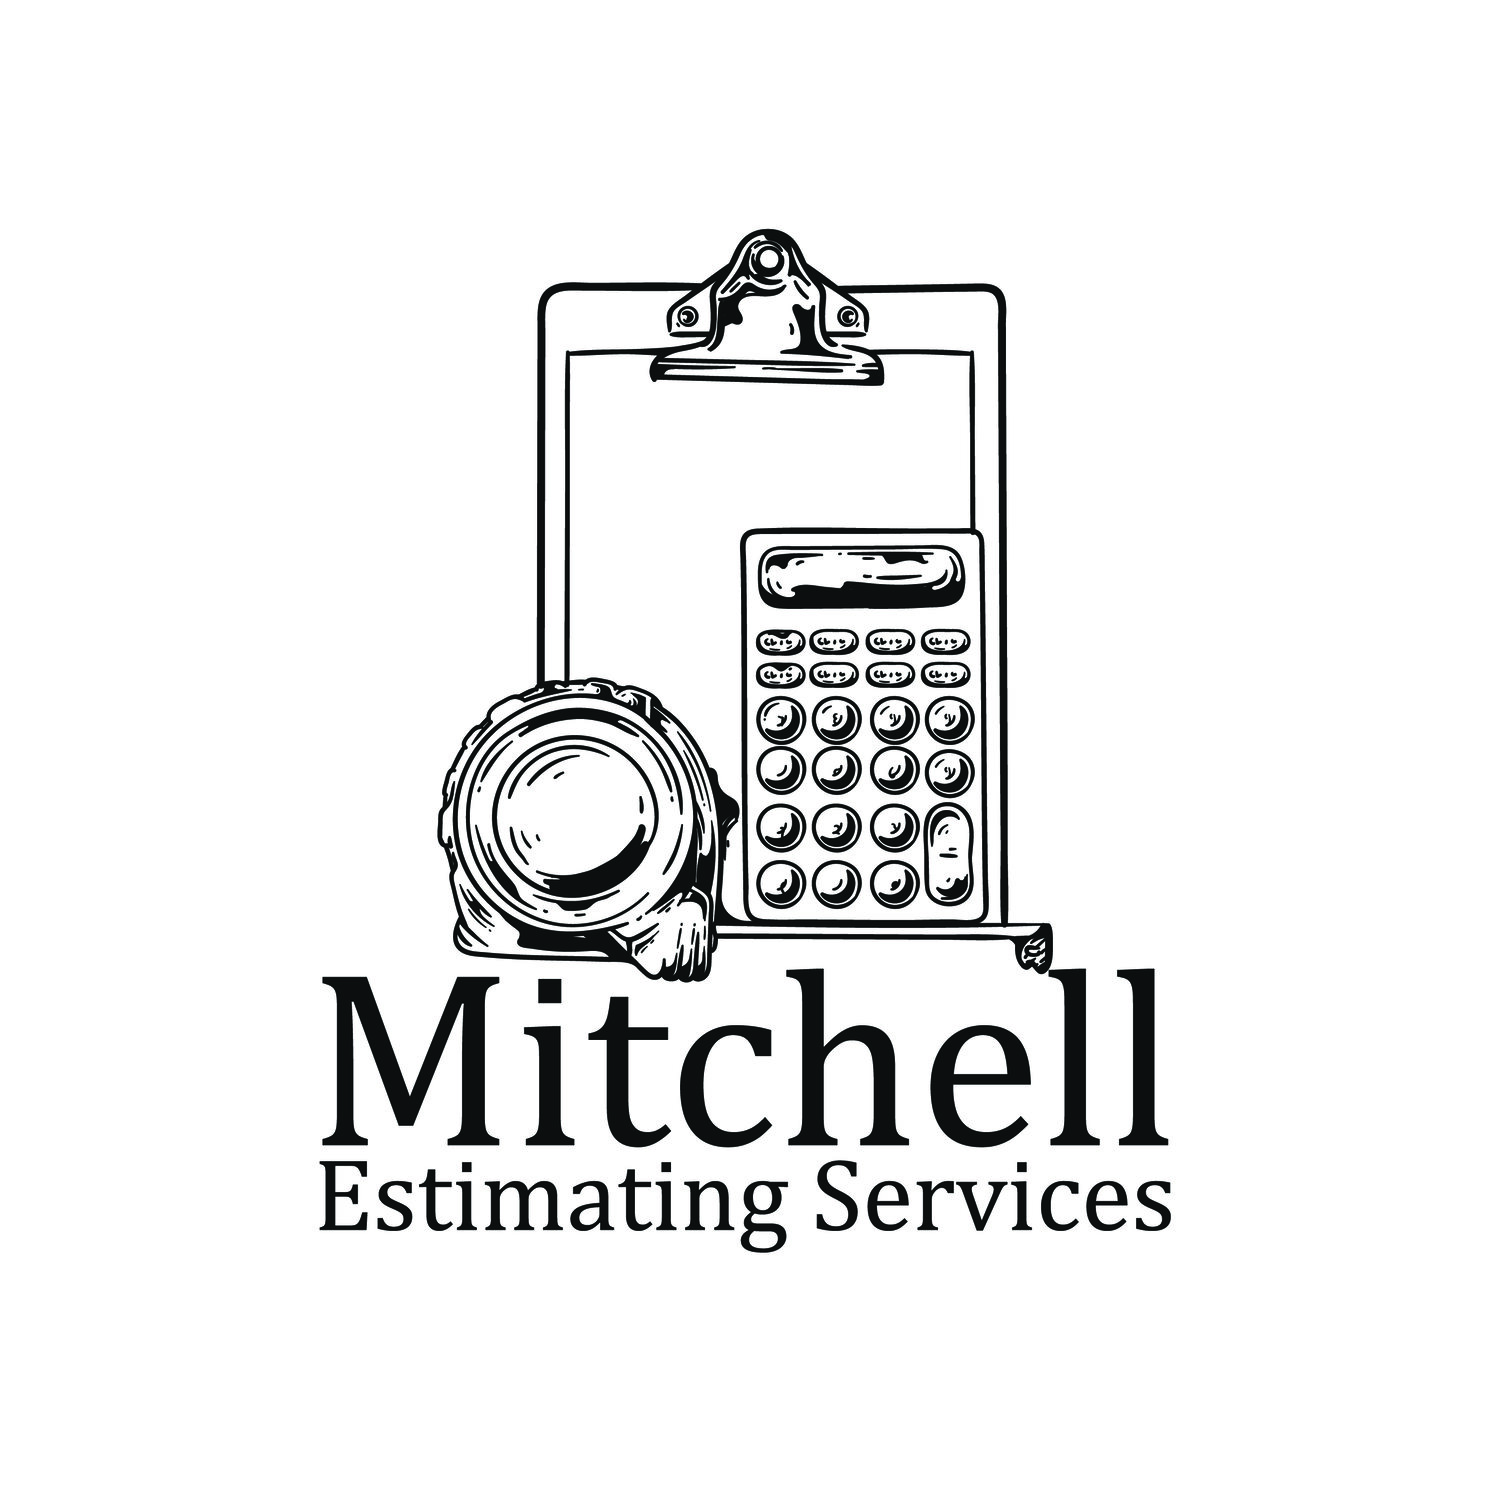 www.mitchellestimatingservices.com